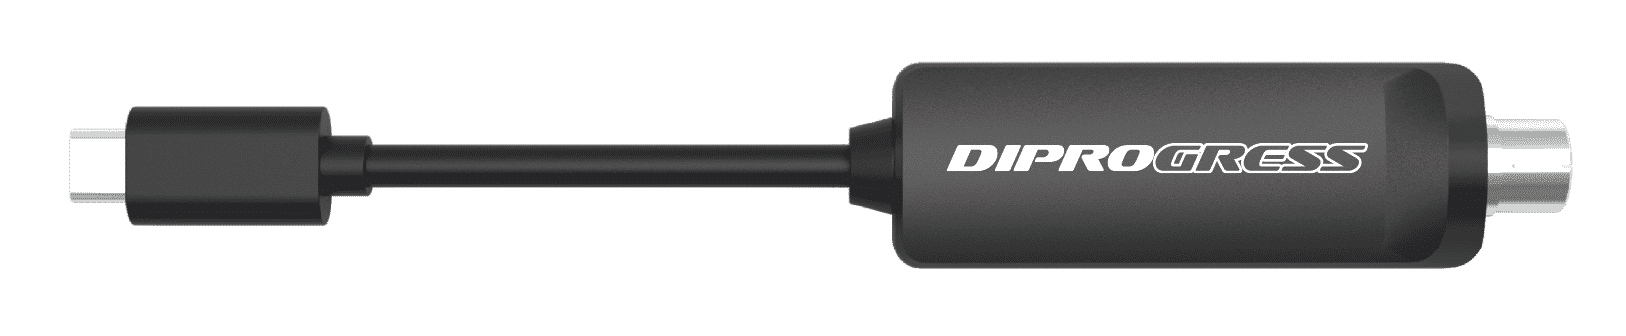 DONGLE DVB-T2